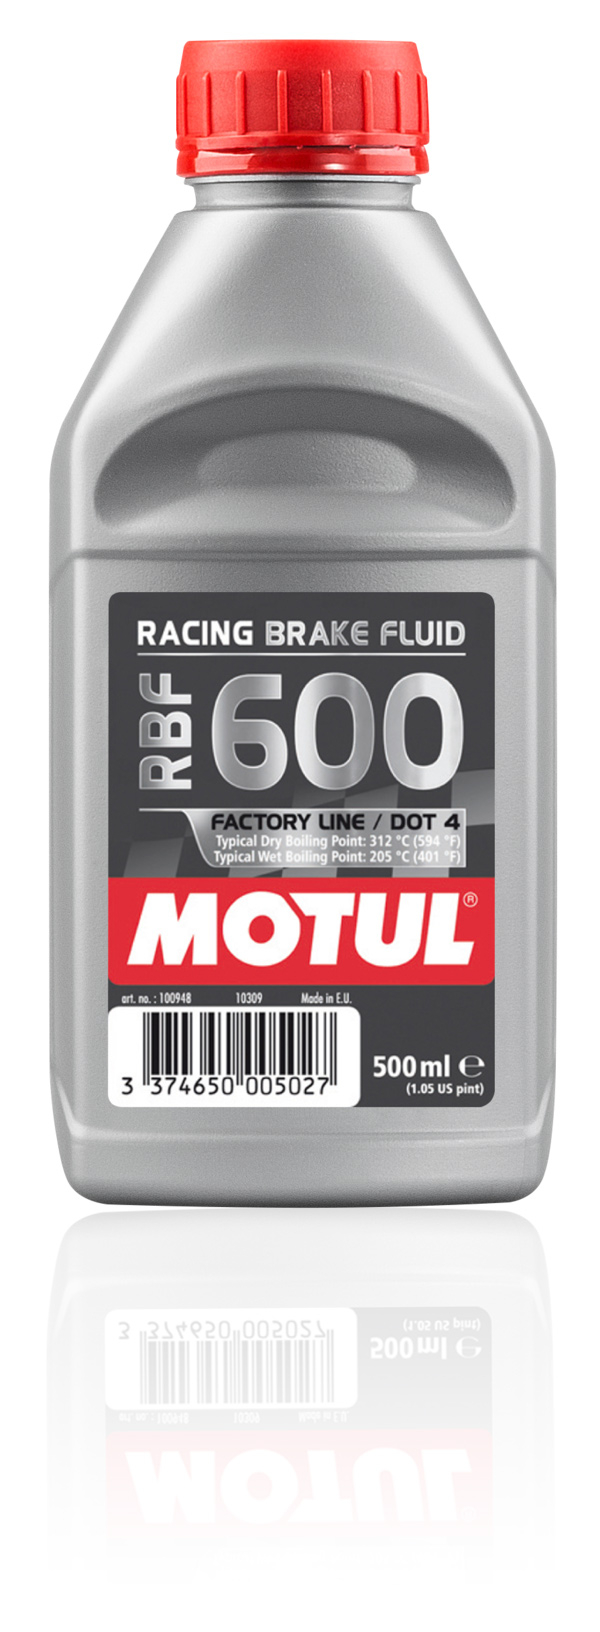 Motul Motorsport Brake Fluid RBF 600 DOT 4